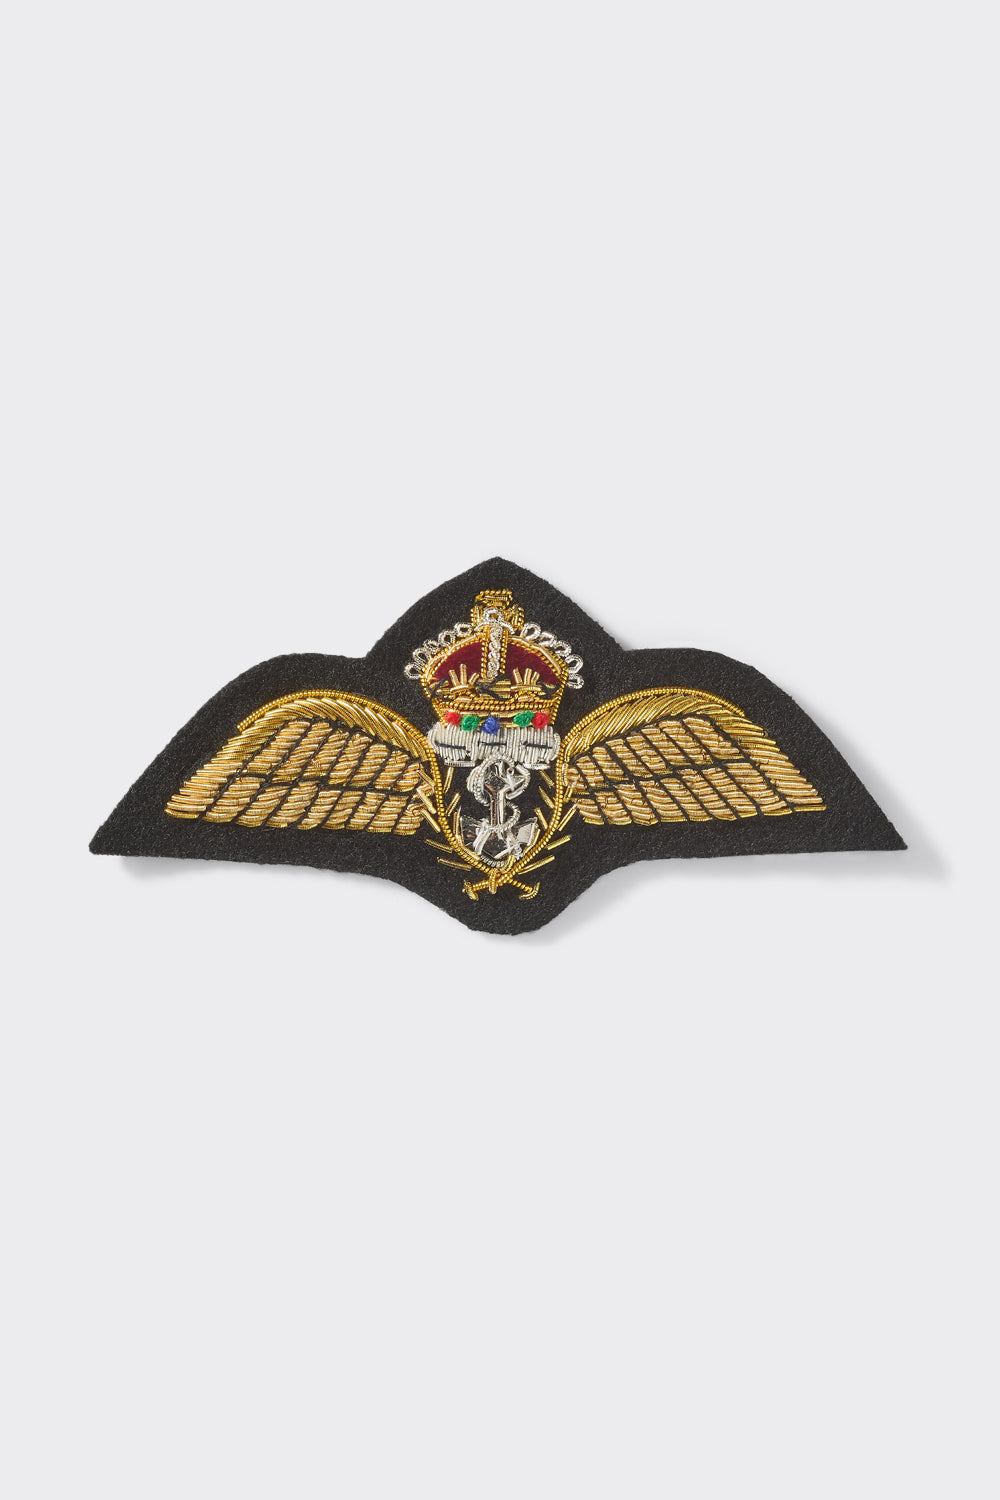 Fleet Air Arm Tudor Crown Embroidered Badge - Large